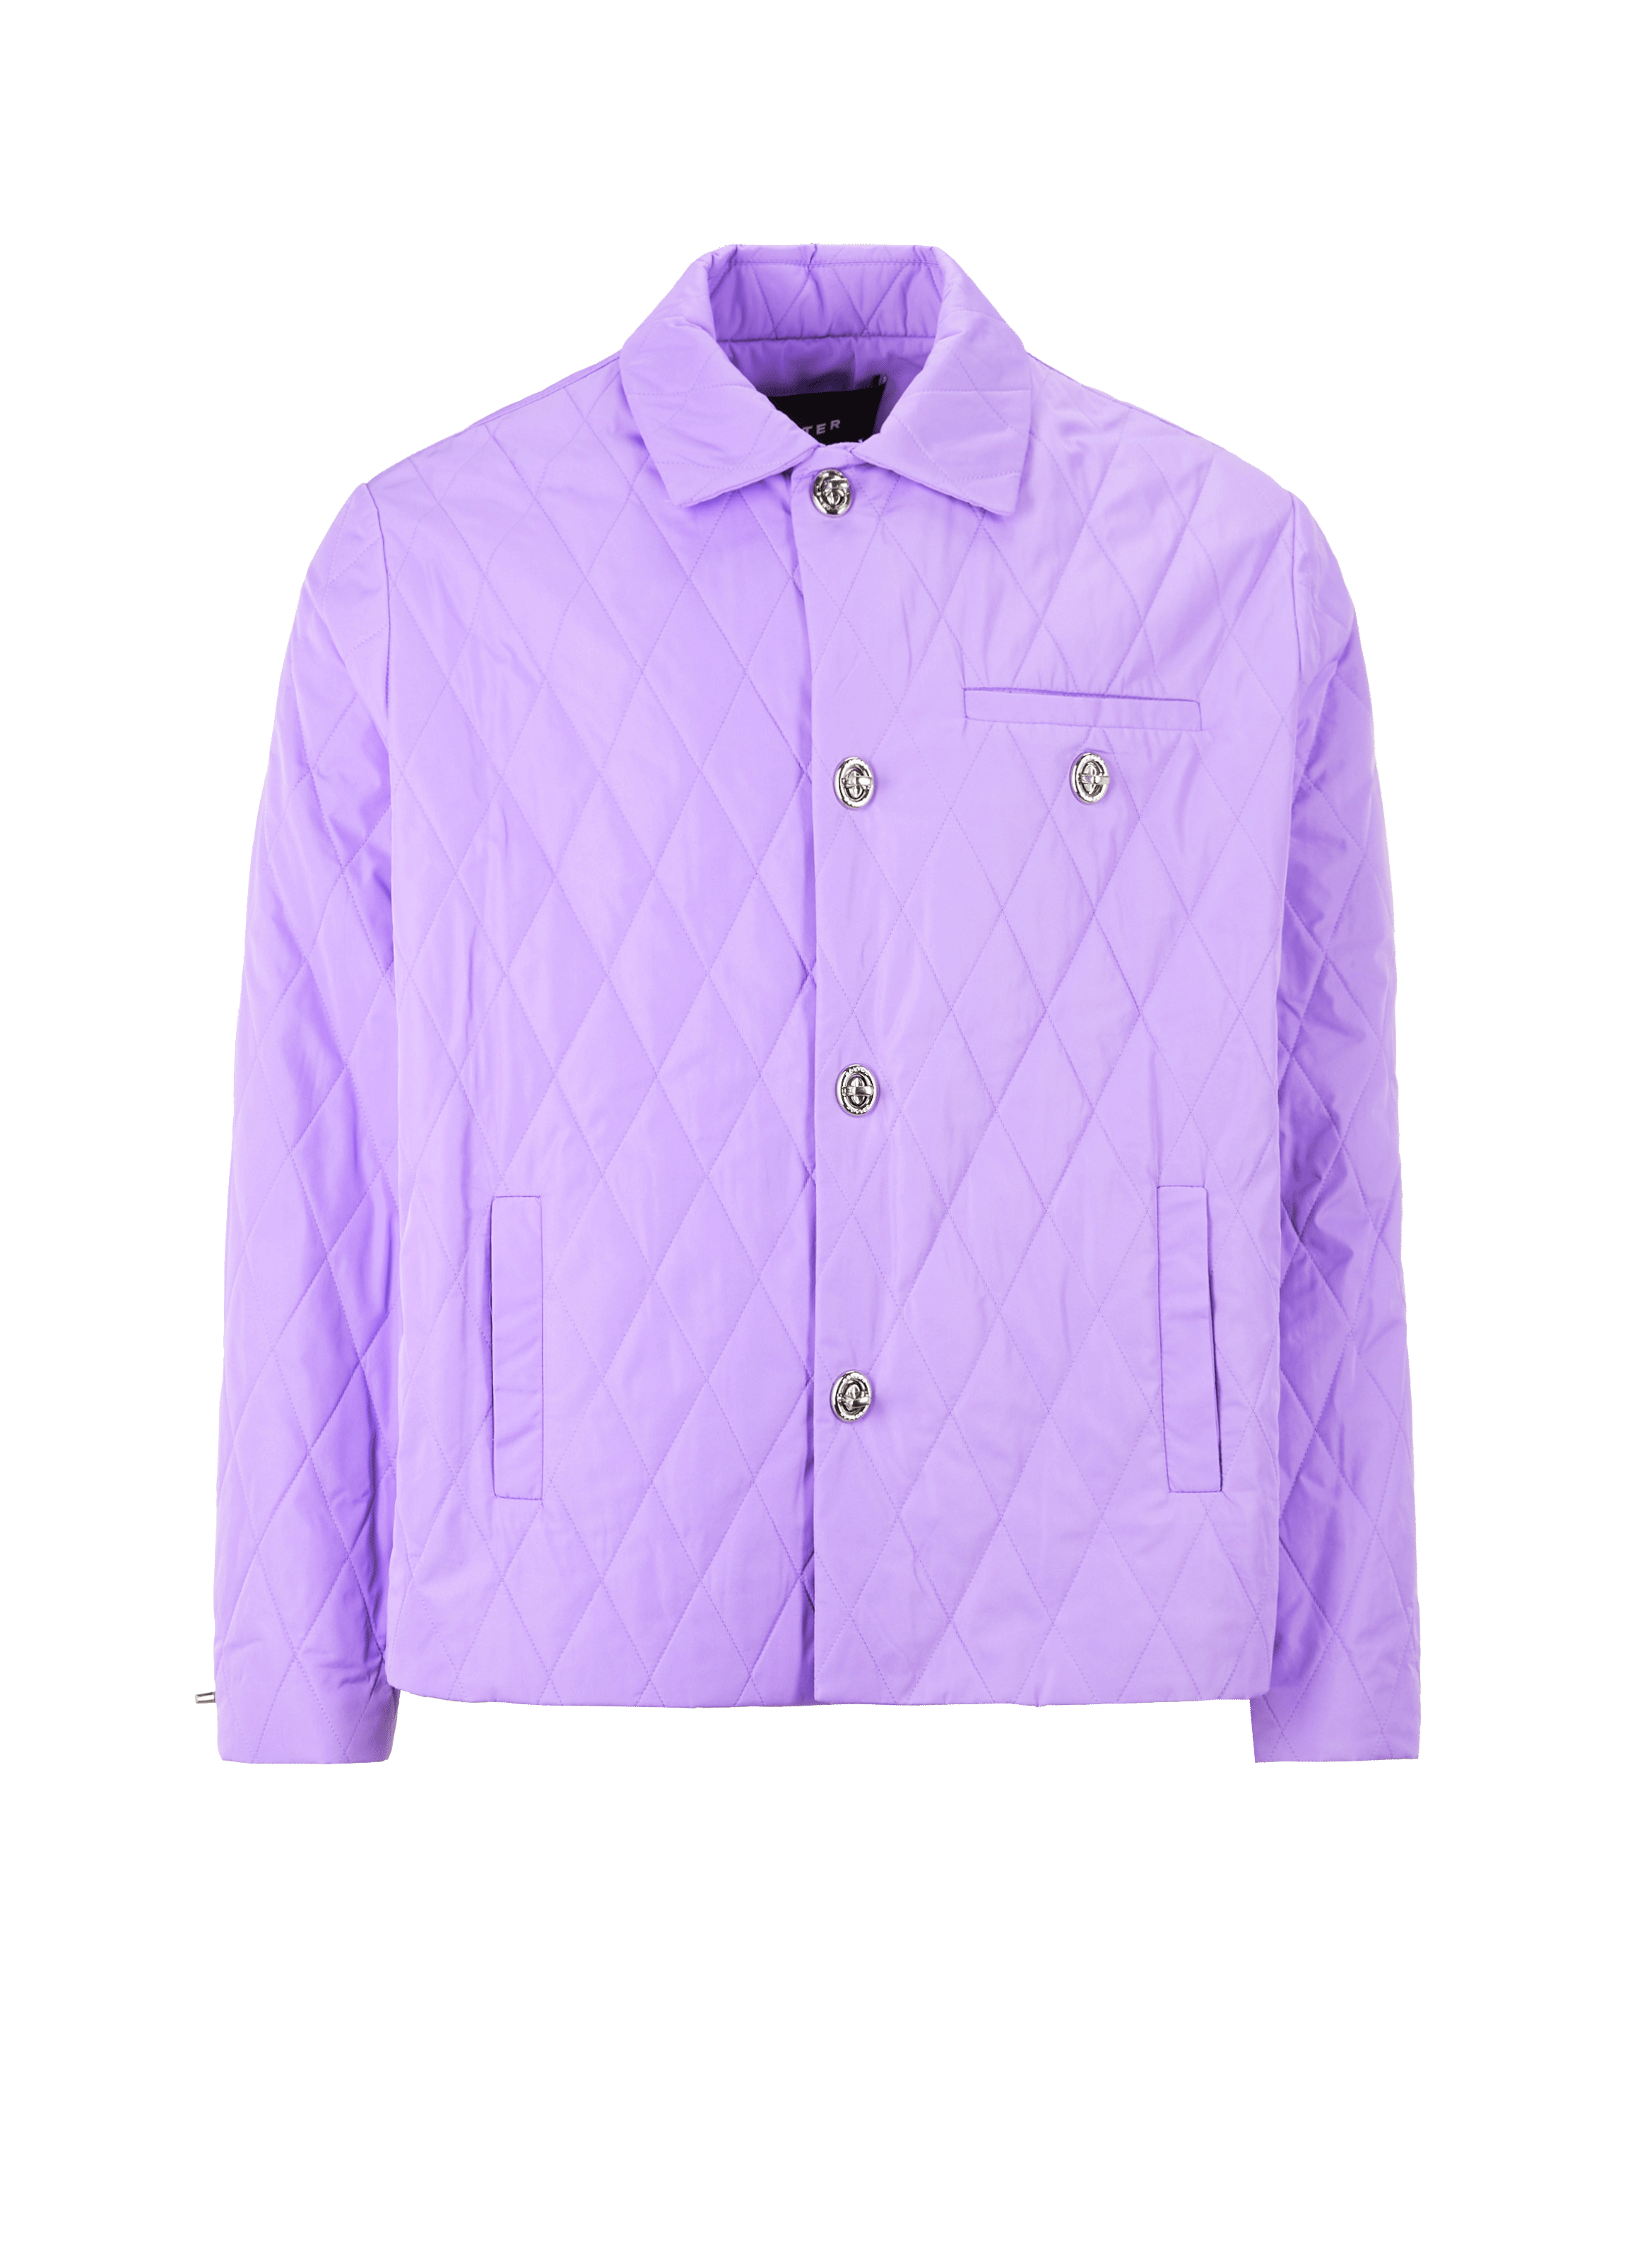 Chia sẻ 67 về louis vuitton purple denim jacket hay nhất  trieuson5